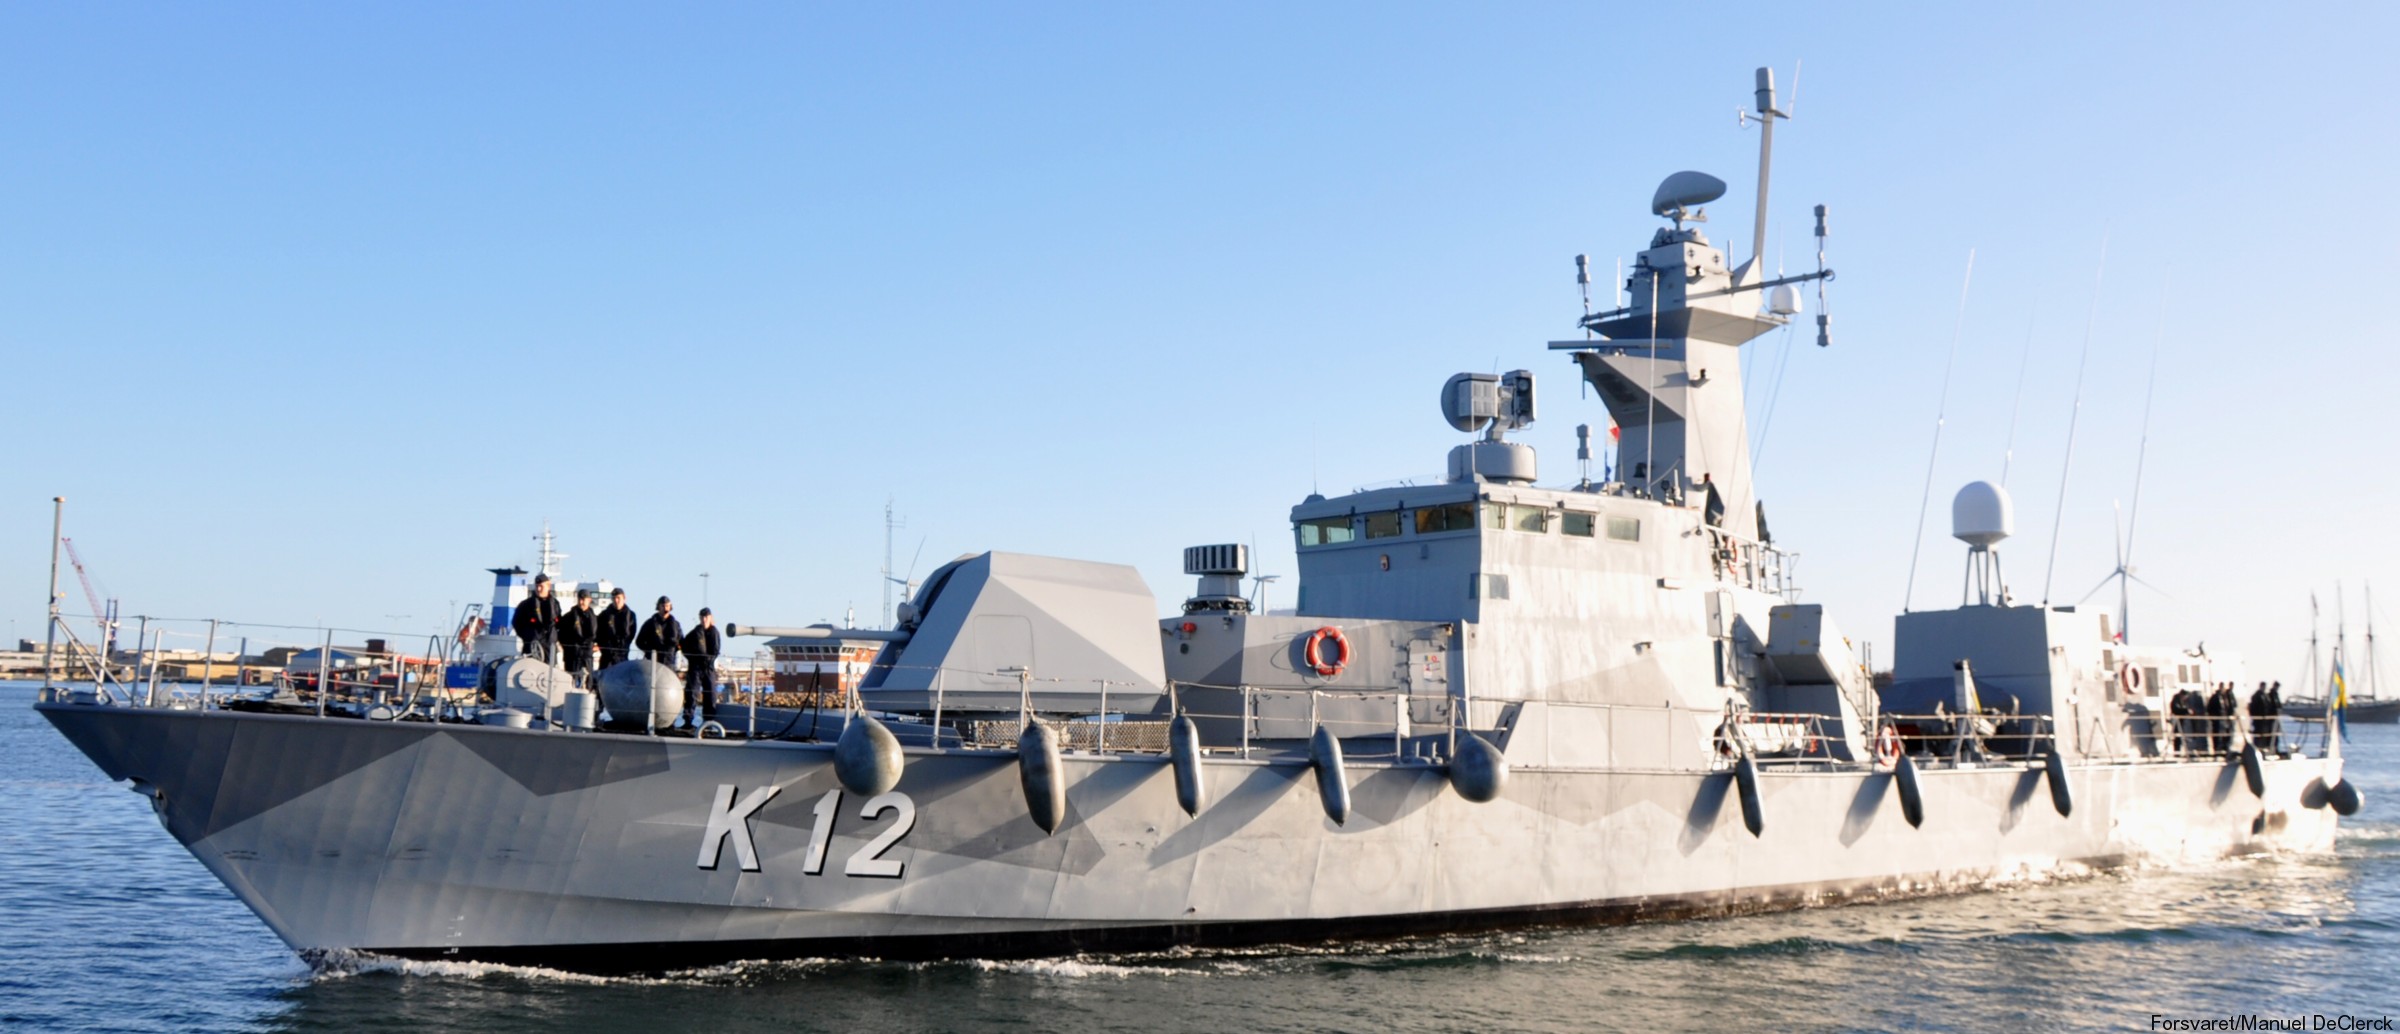 K12 P12 hswms malmö hms stockholm class corvette patrol vessel swedish navy svenska marinen forsvarsmakten 04